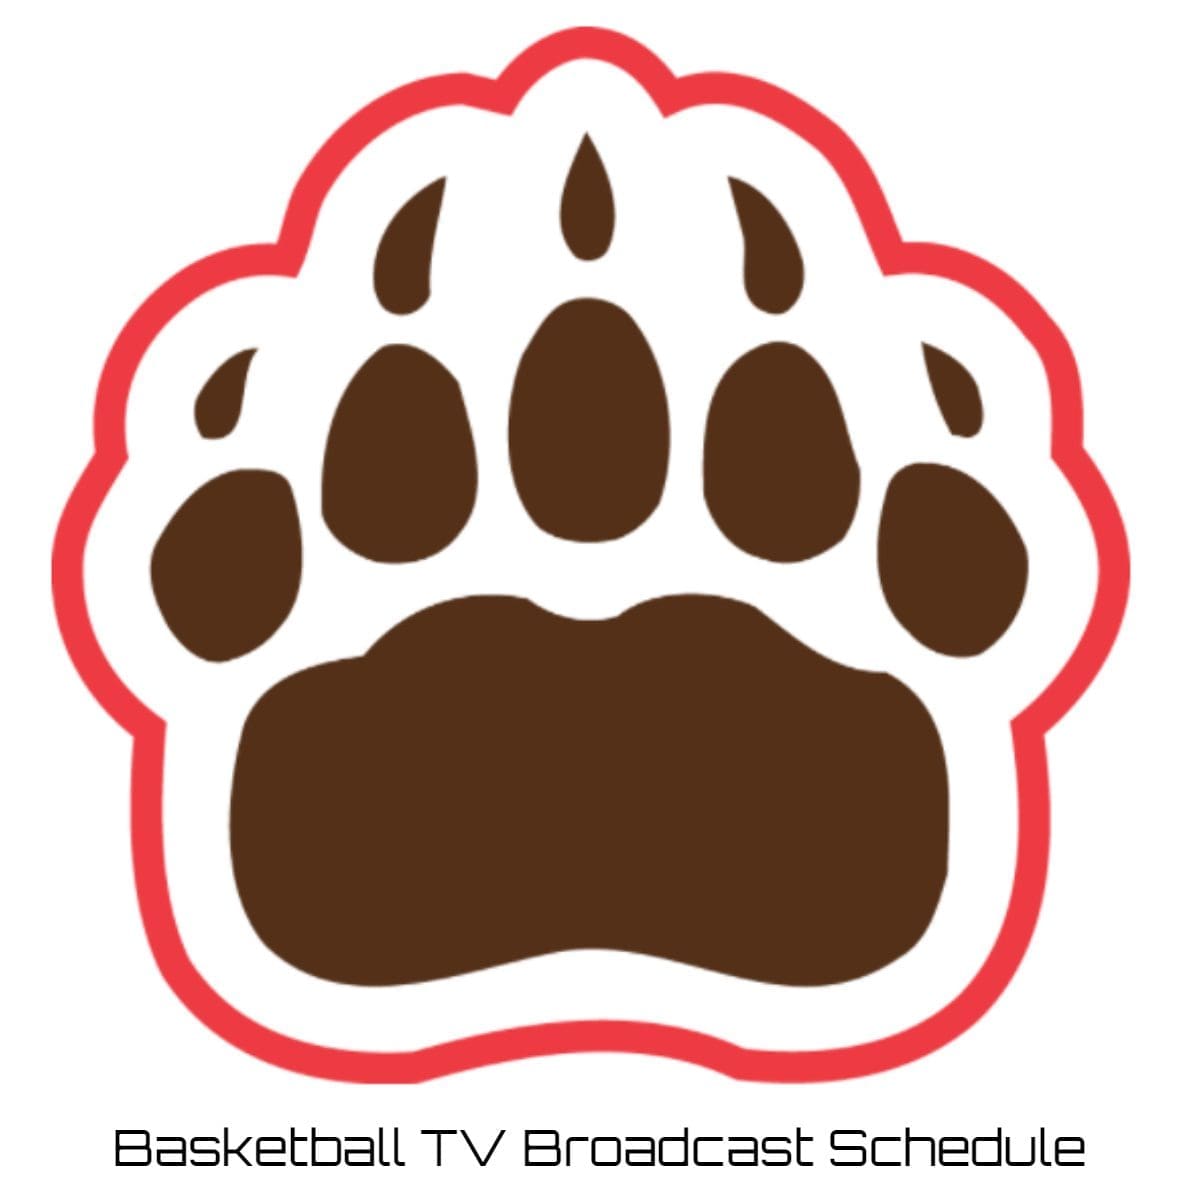 Brown Bears Basketball TV Broadcast Schedule